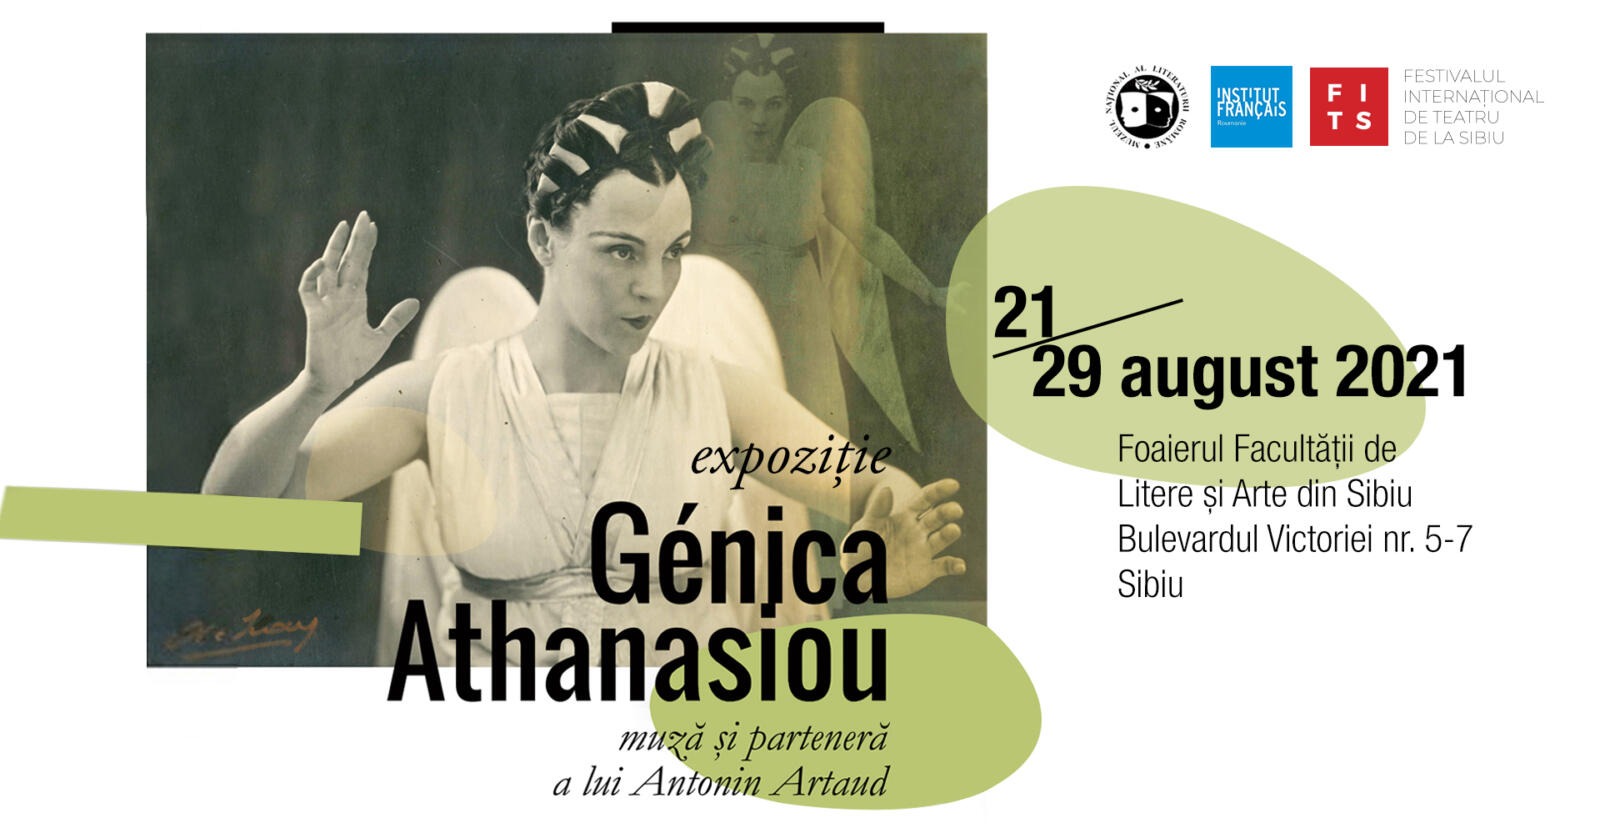 Expo Genica Athanasiou Sibiu